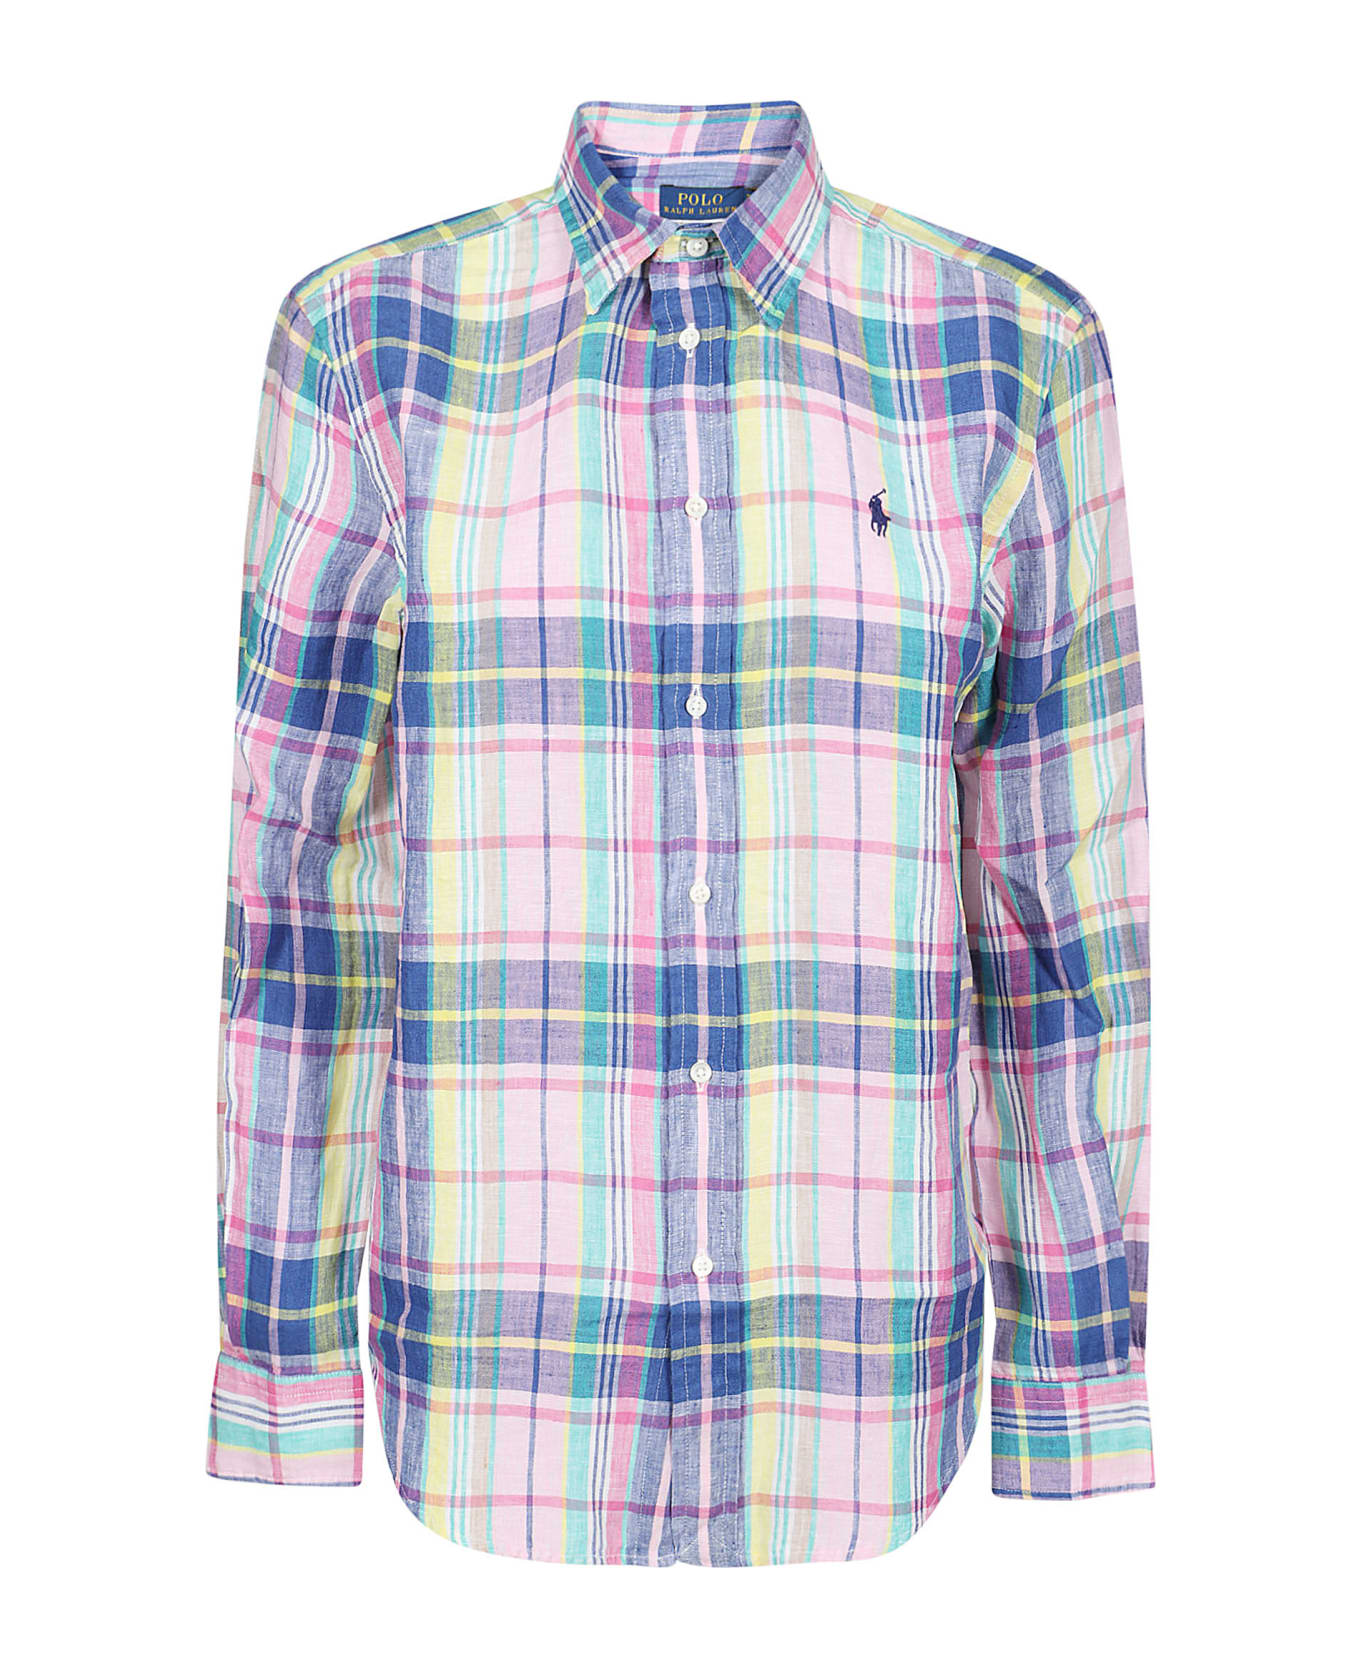 Polo Ralph Lauren Long Sleeve Button Front Shirt - Pink/blue/multicolor